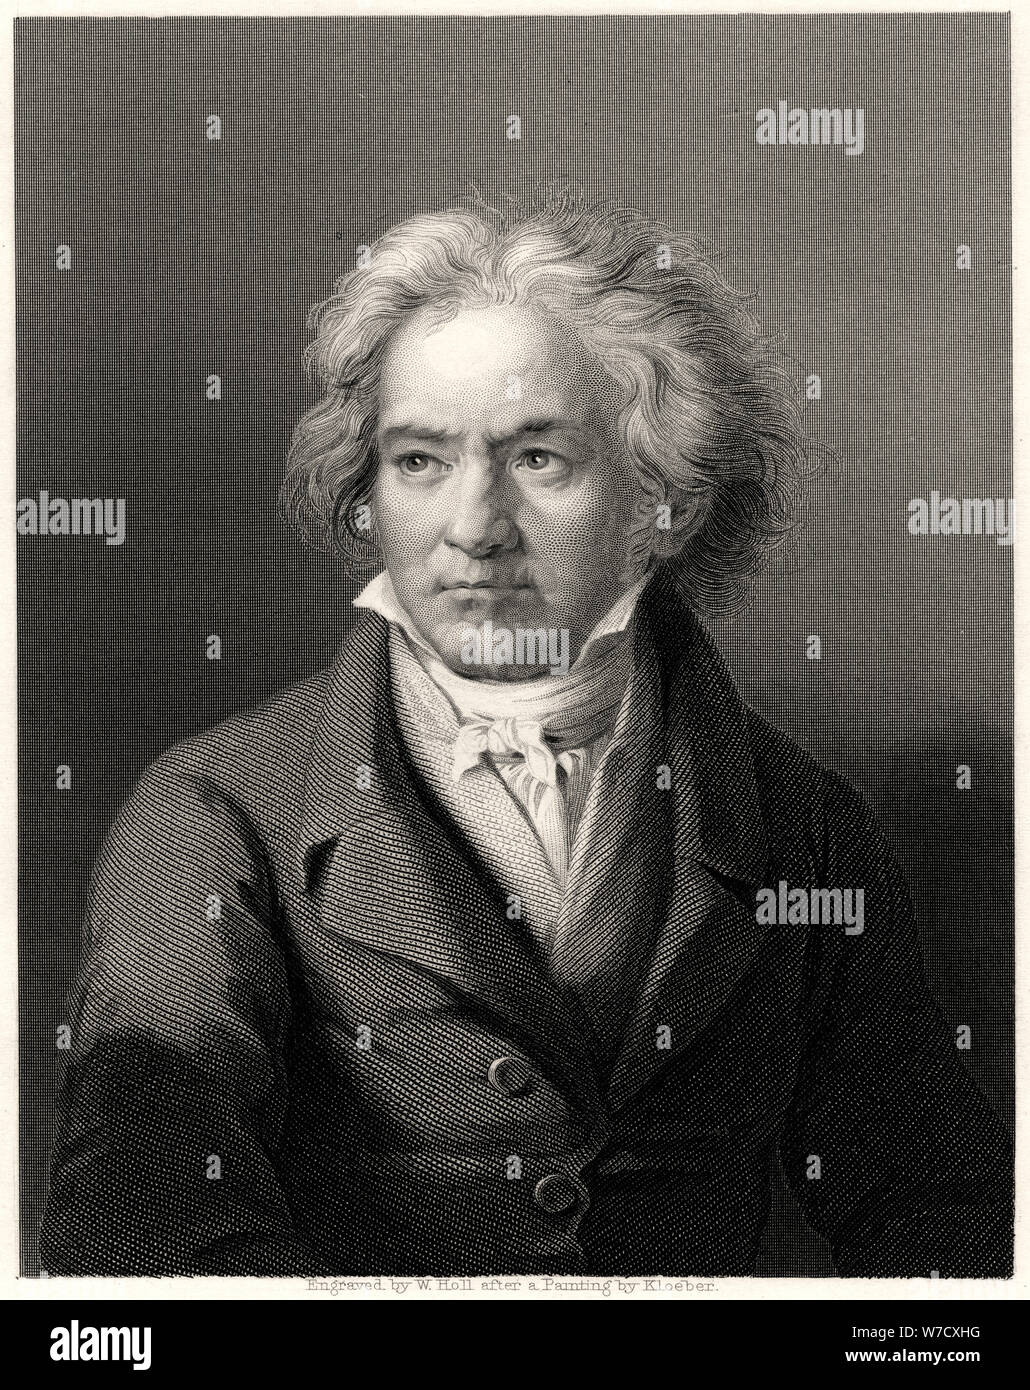 "Beethoven', del xix secolo. Artista: William Holl Foto Stock